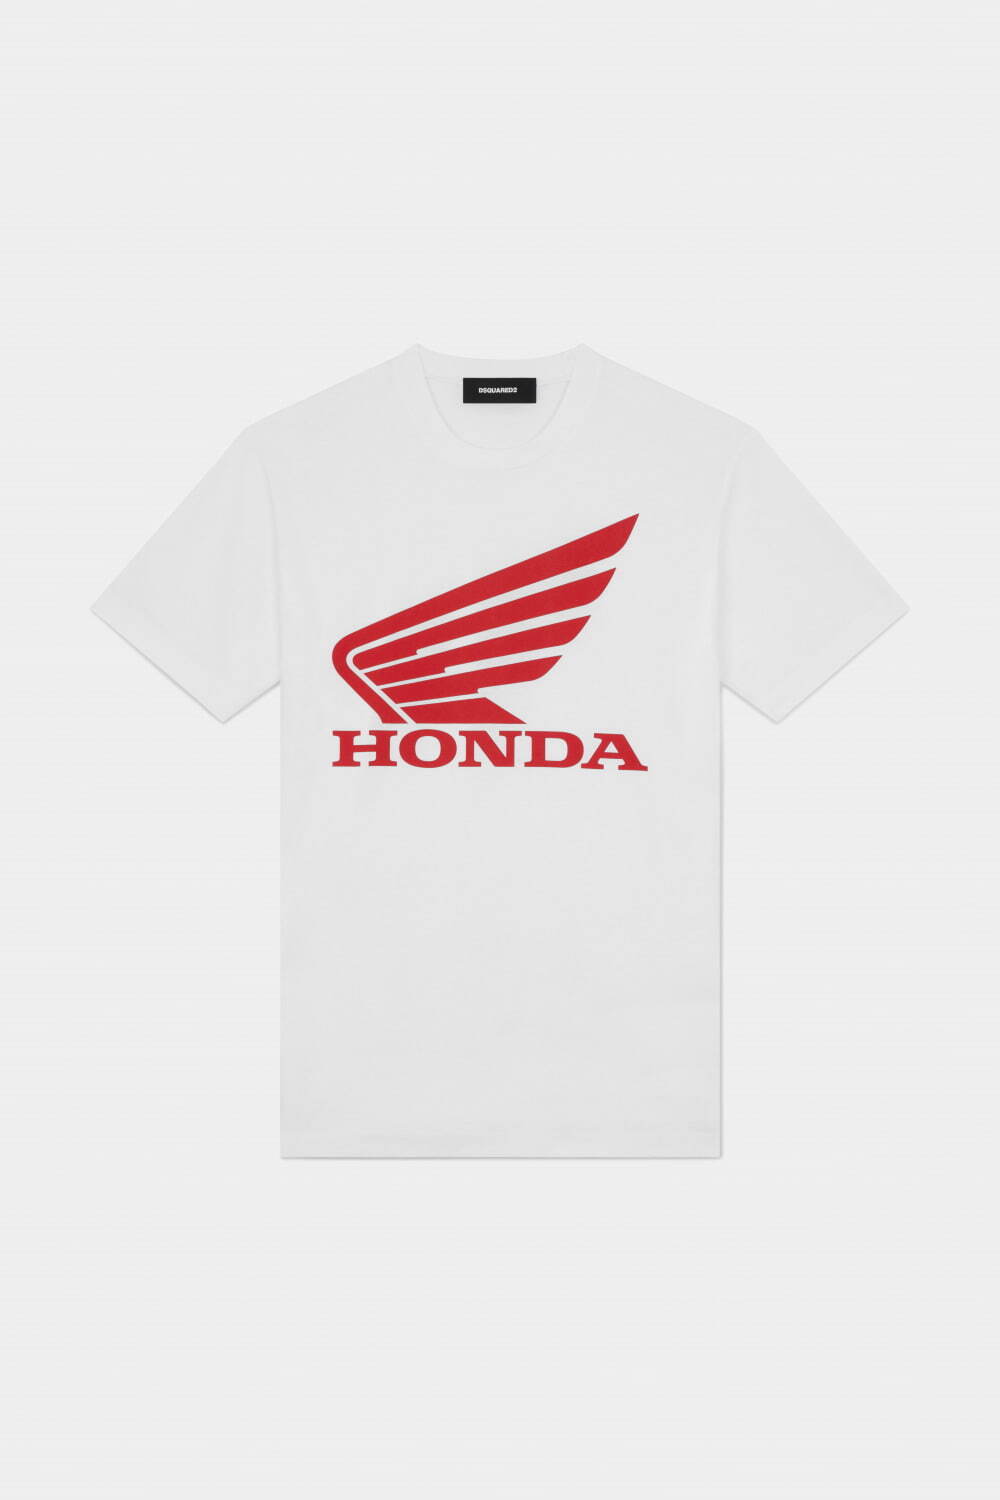 Honda Cool T-shirt 42,900円